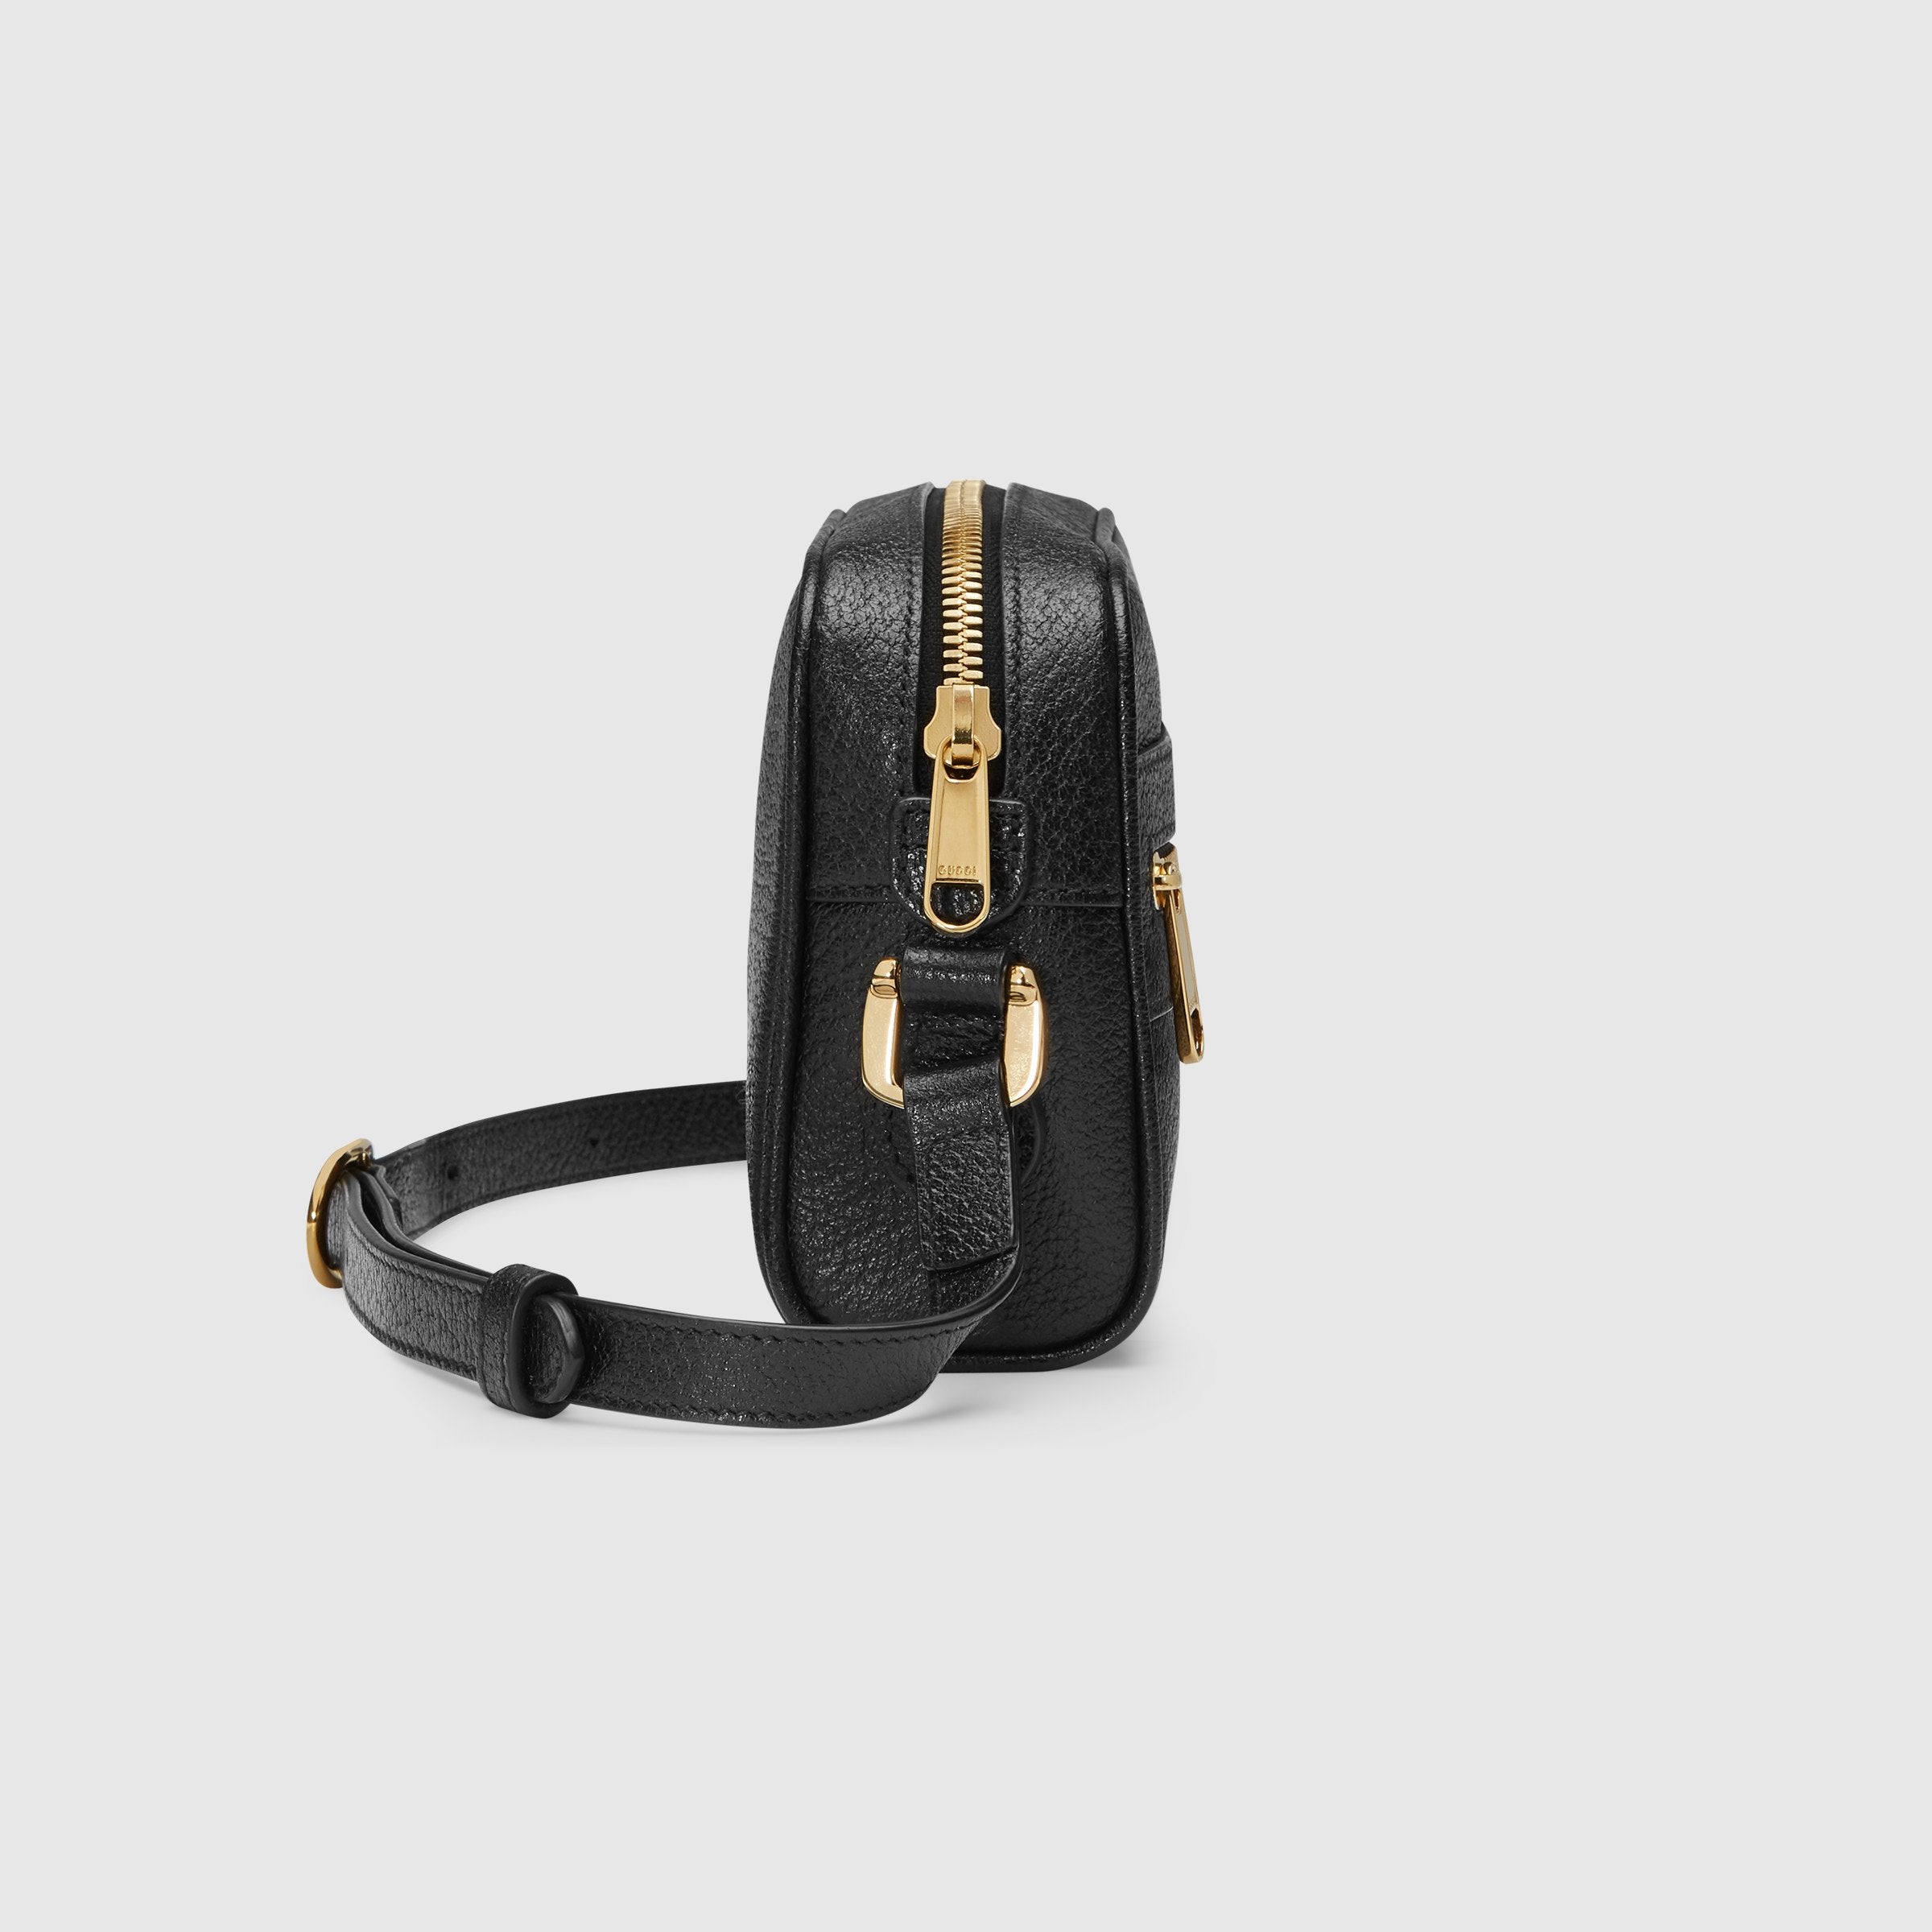 Gucci Ophidia Leather Mini Bag Black